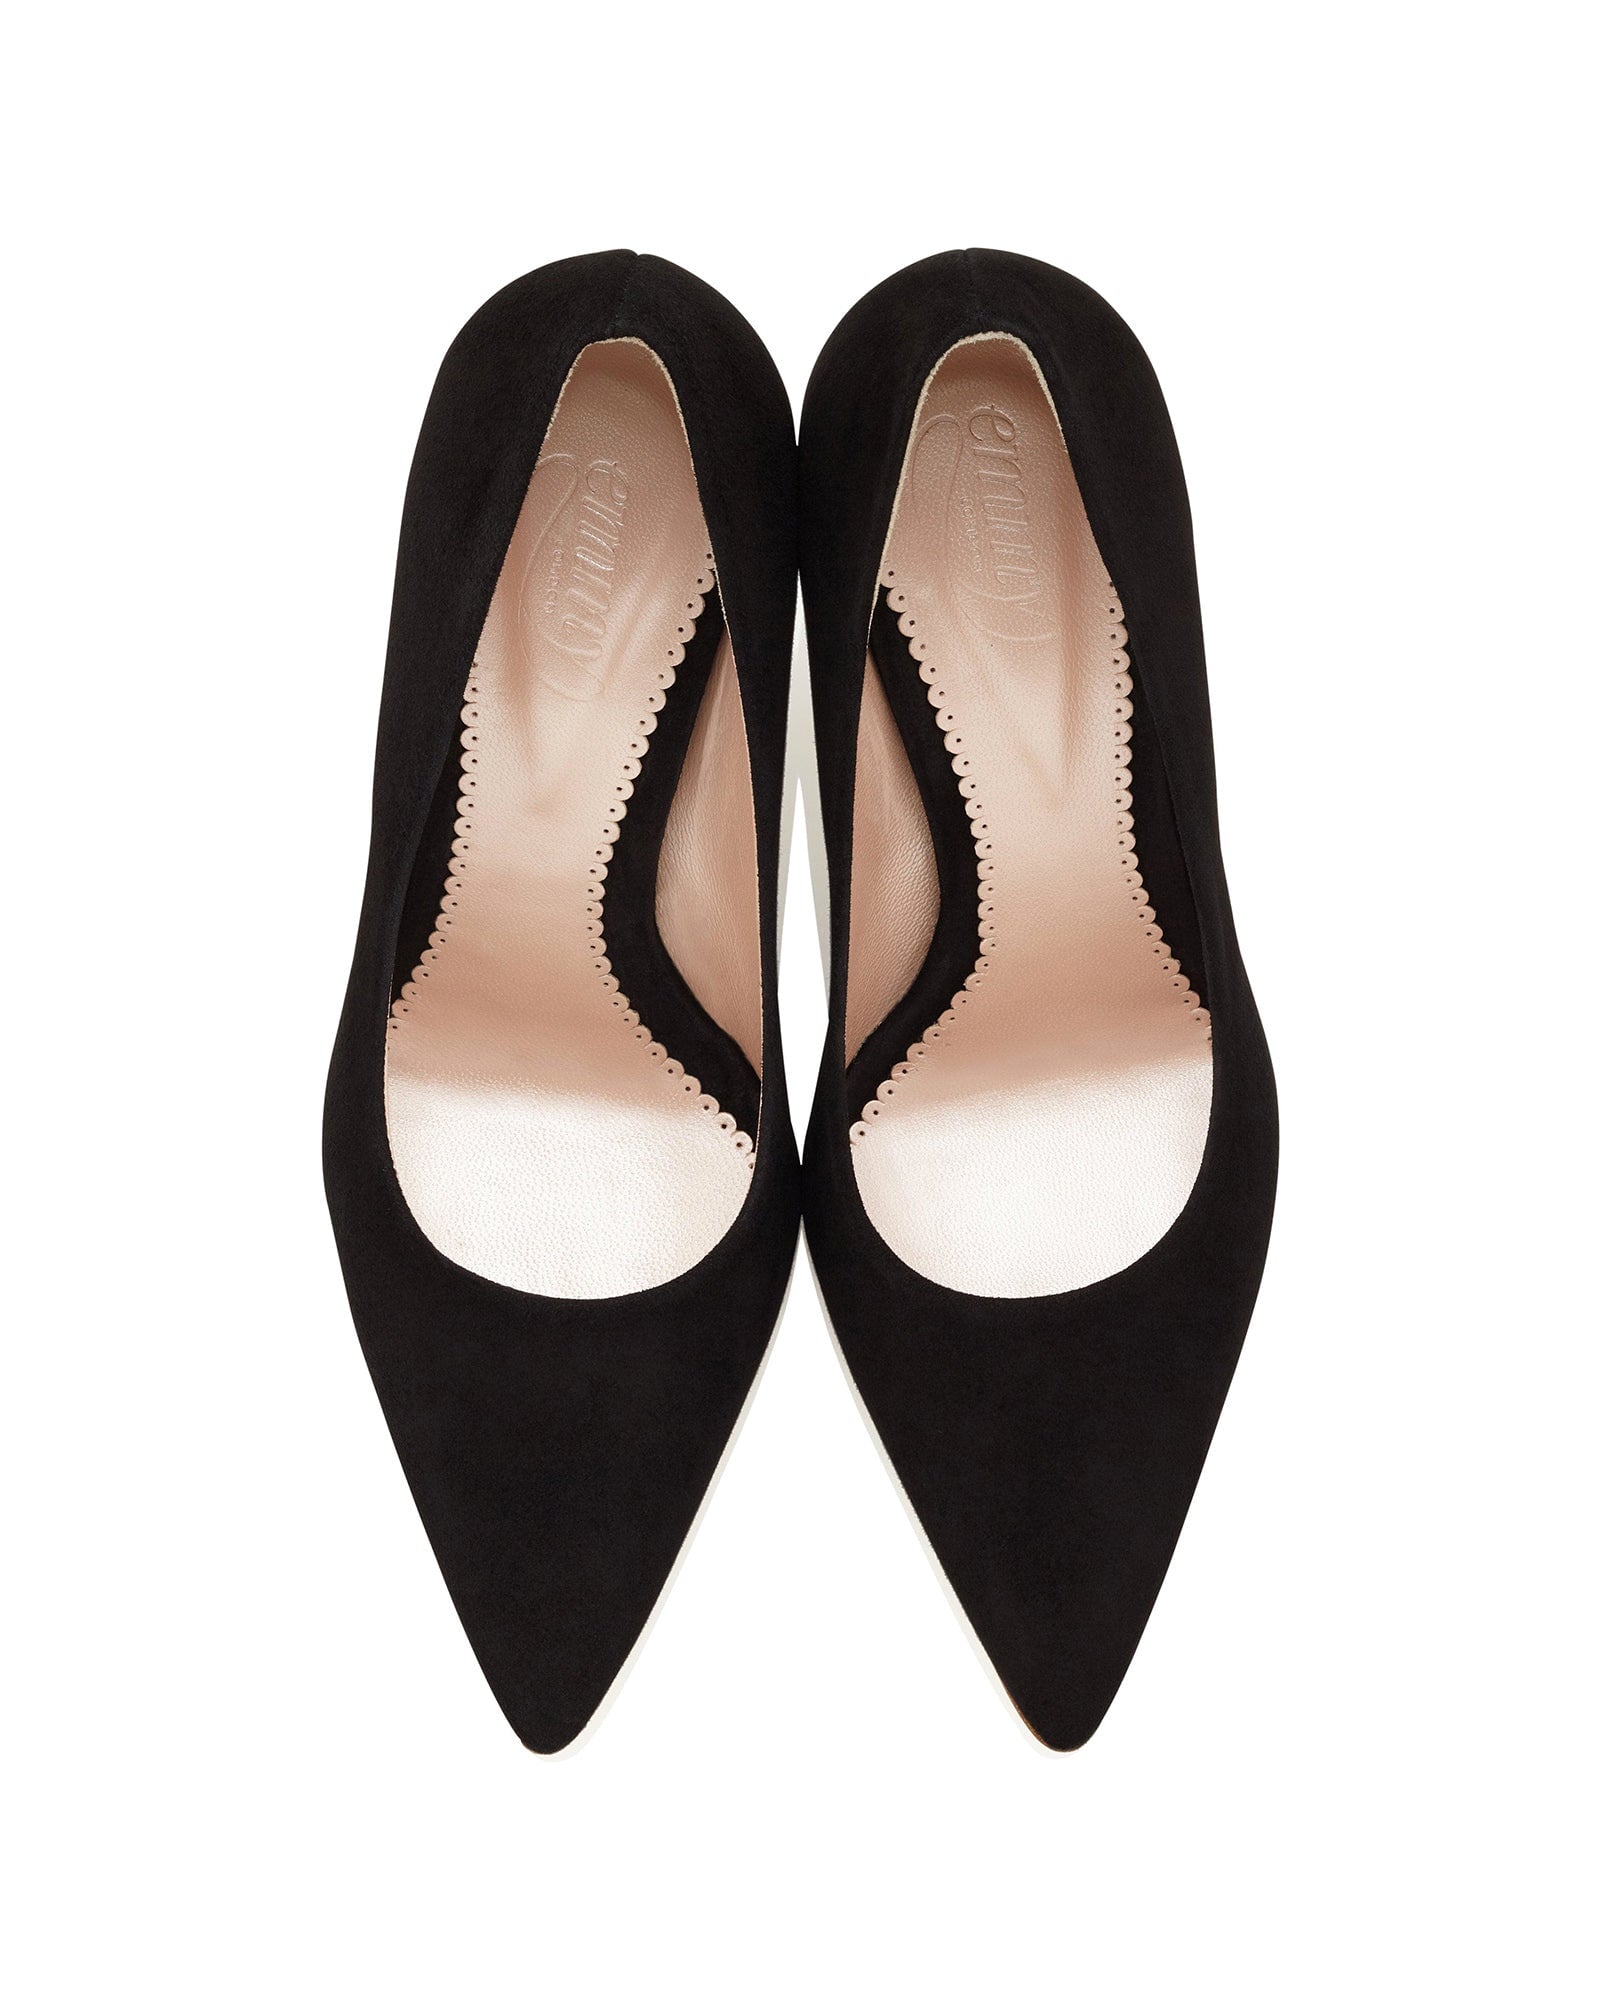 Olivia Jet Black Fashion Shoe Jet Black Court Shoes  image